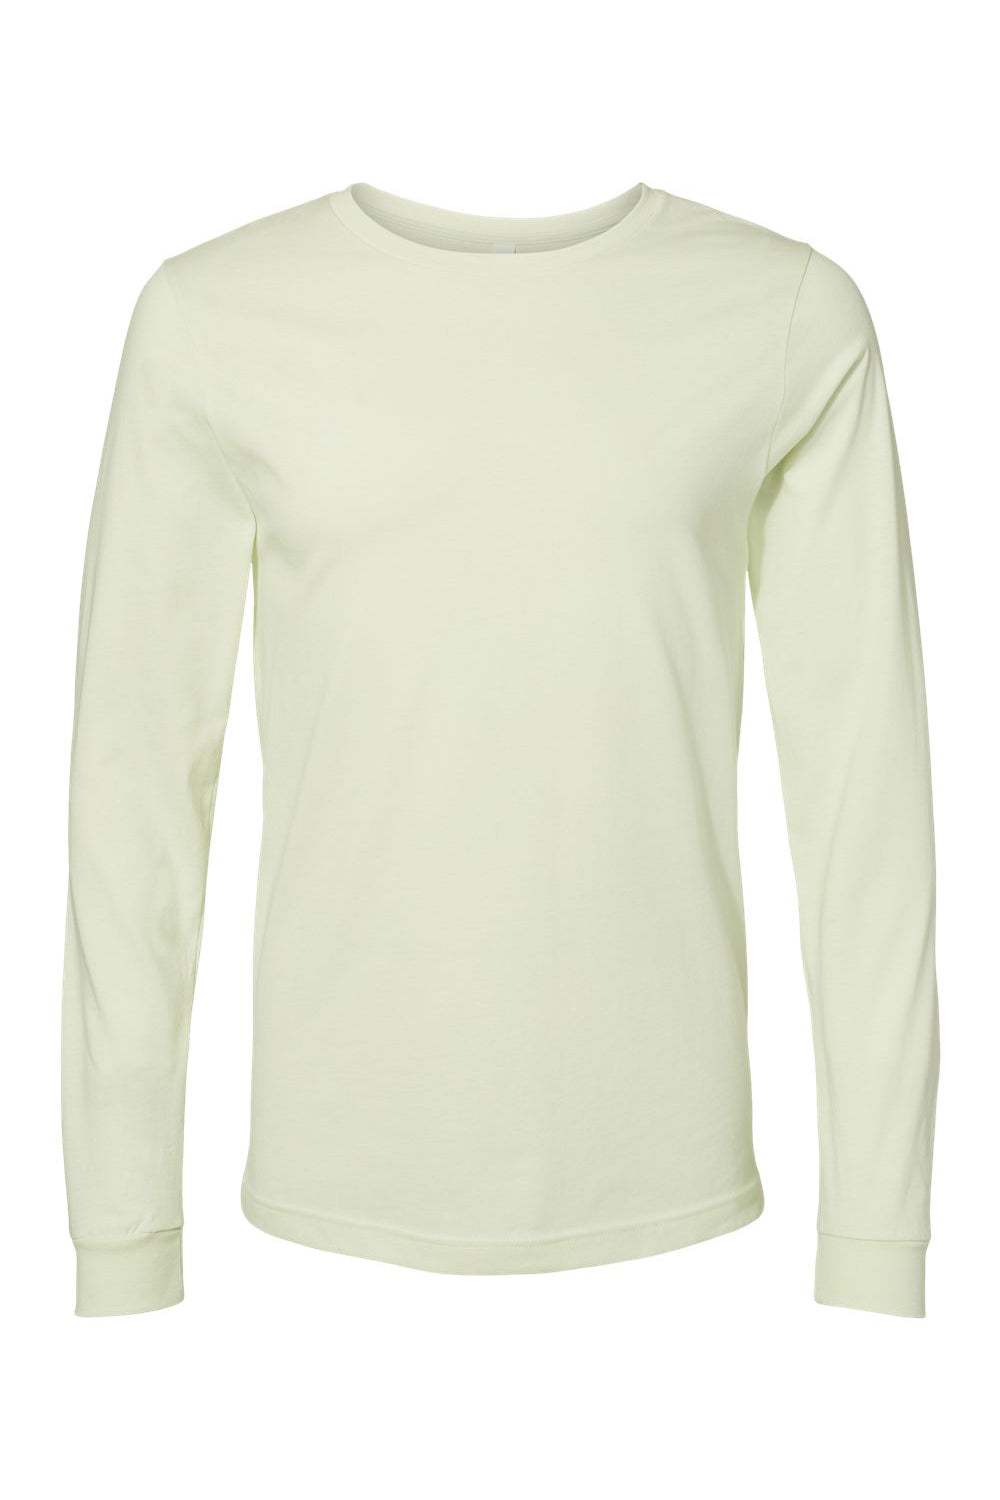 Bella + Canvas BC3501/3501 Mens Jersey Long Sleeve Crewneck T-Shirt Citron Flat Front